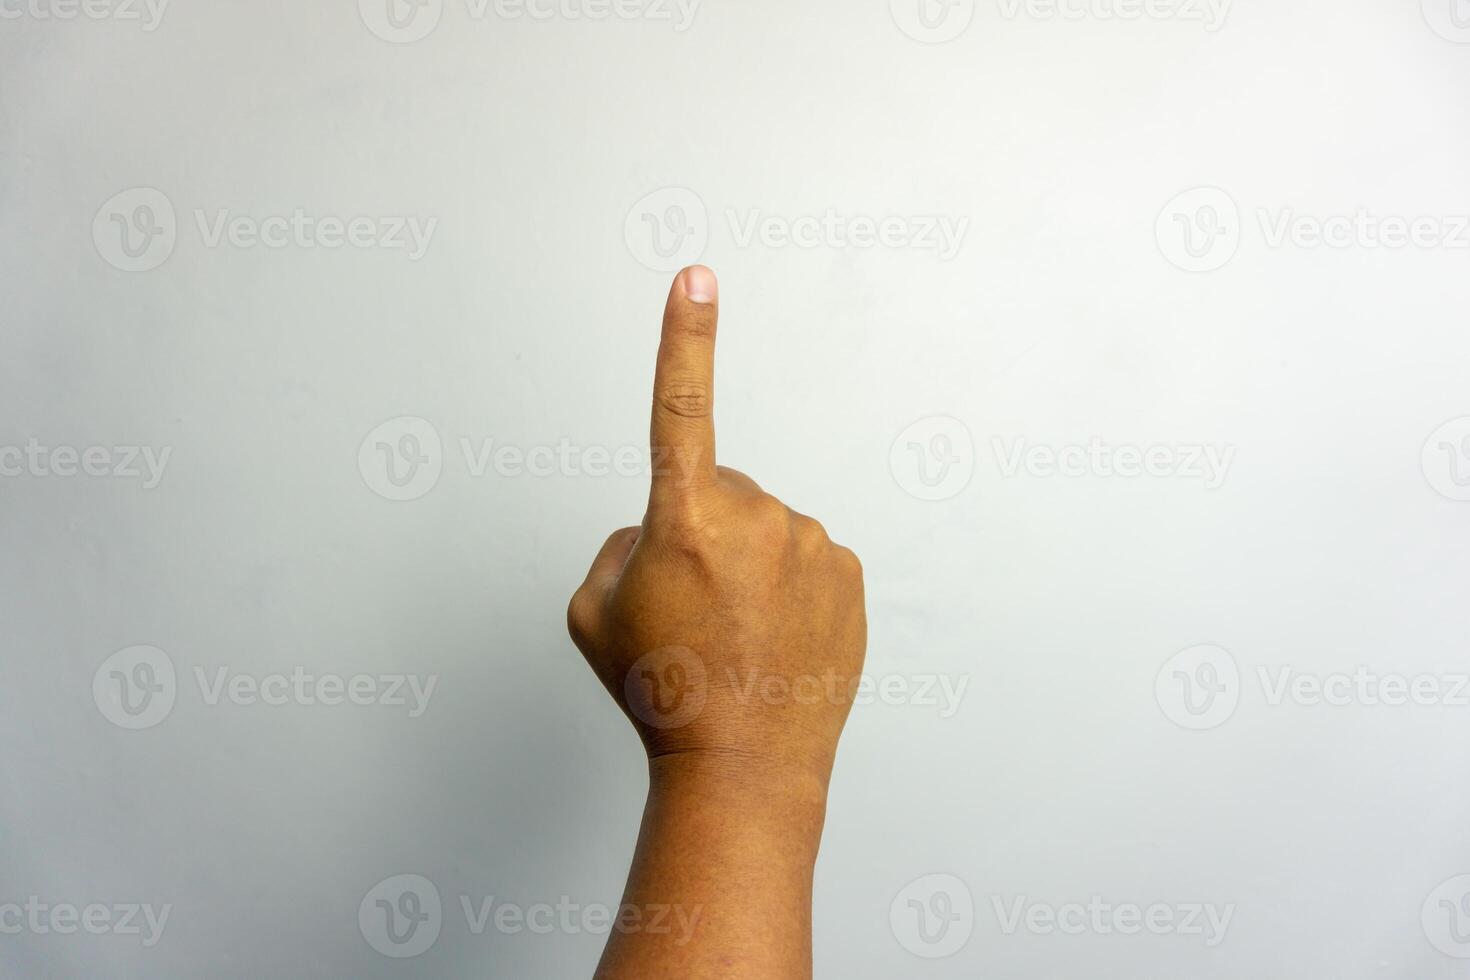 siffra 1 hand tecken isolerat på vit. pekande de finger. man hand siffra ett gest foto